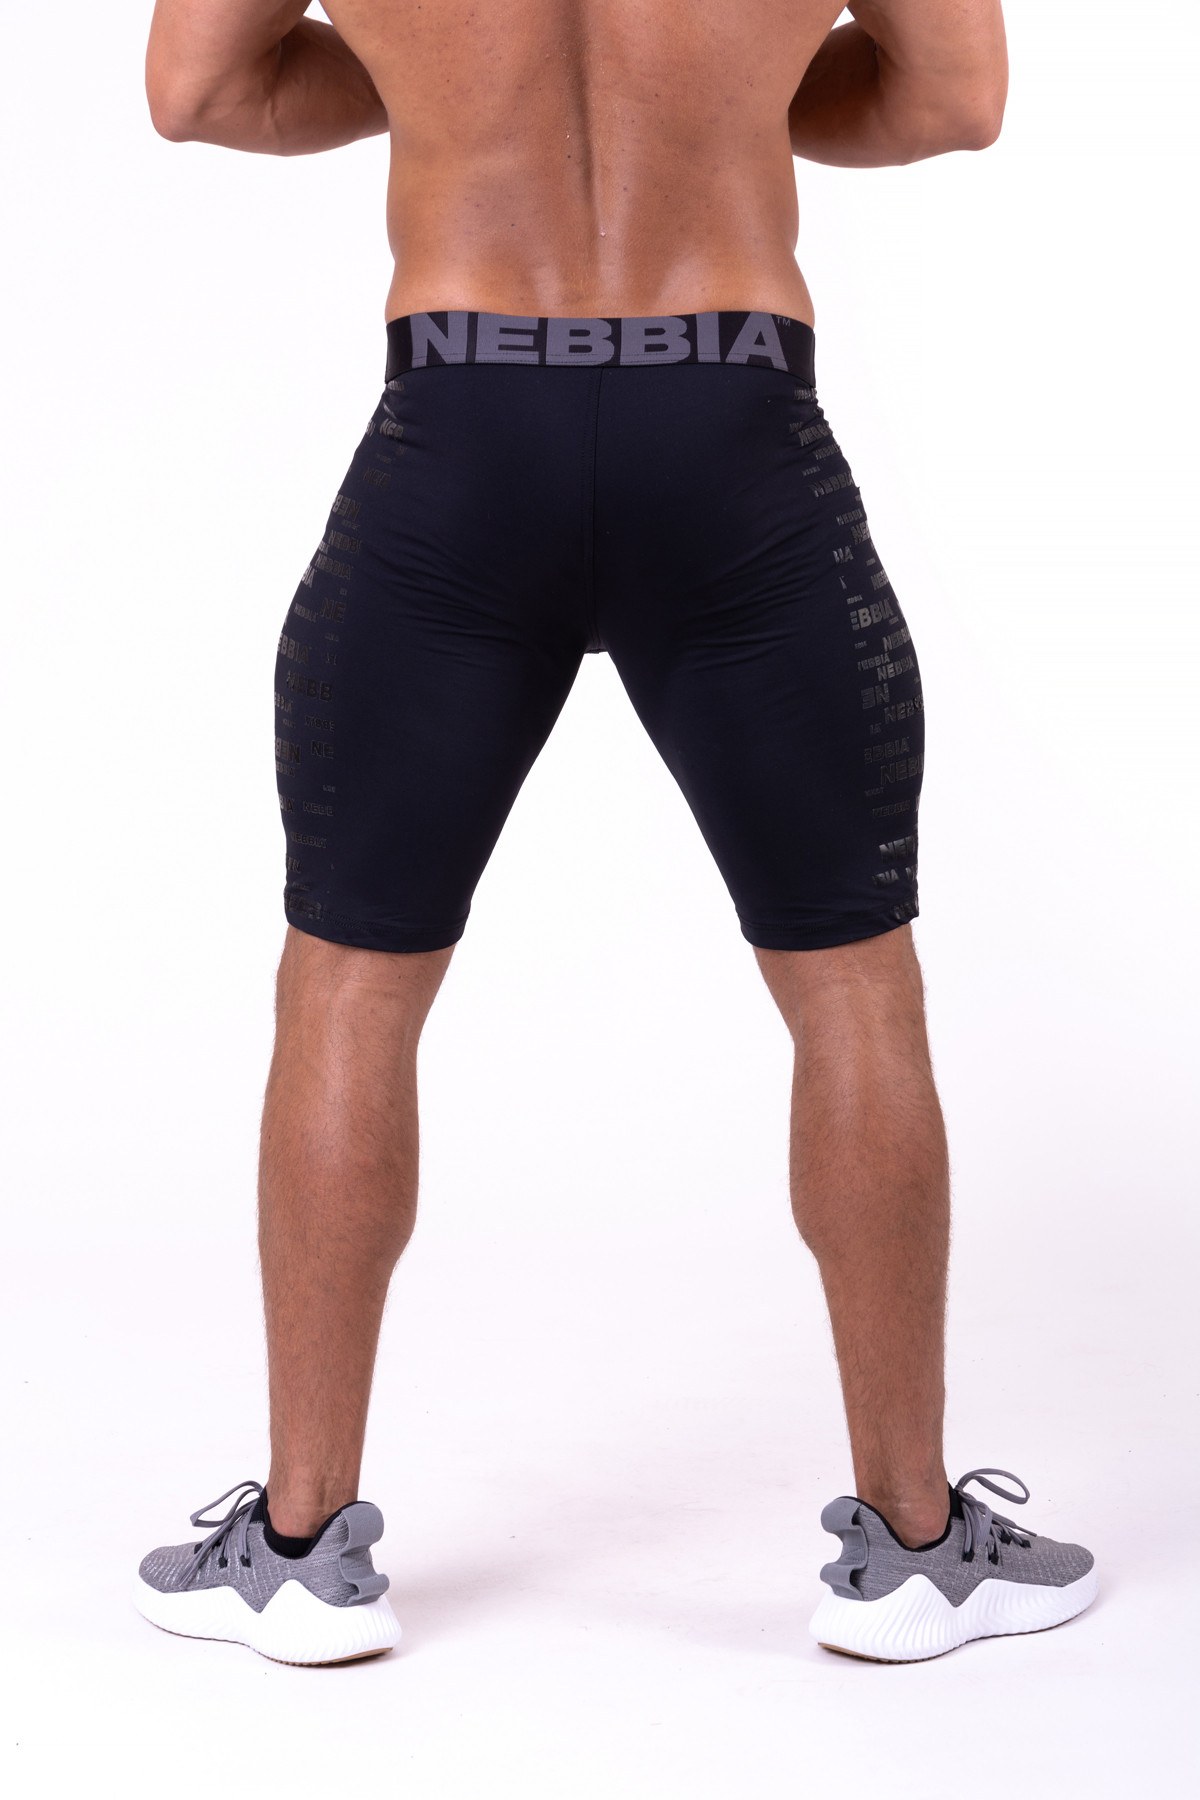 Nebbia Road Hero Biker Shorts 161